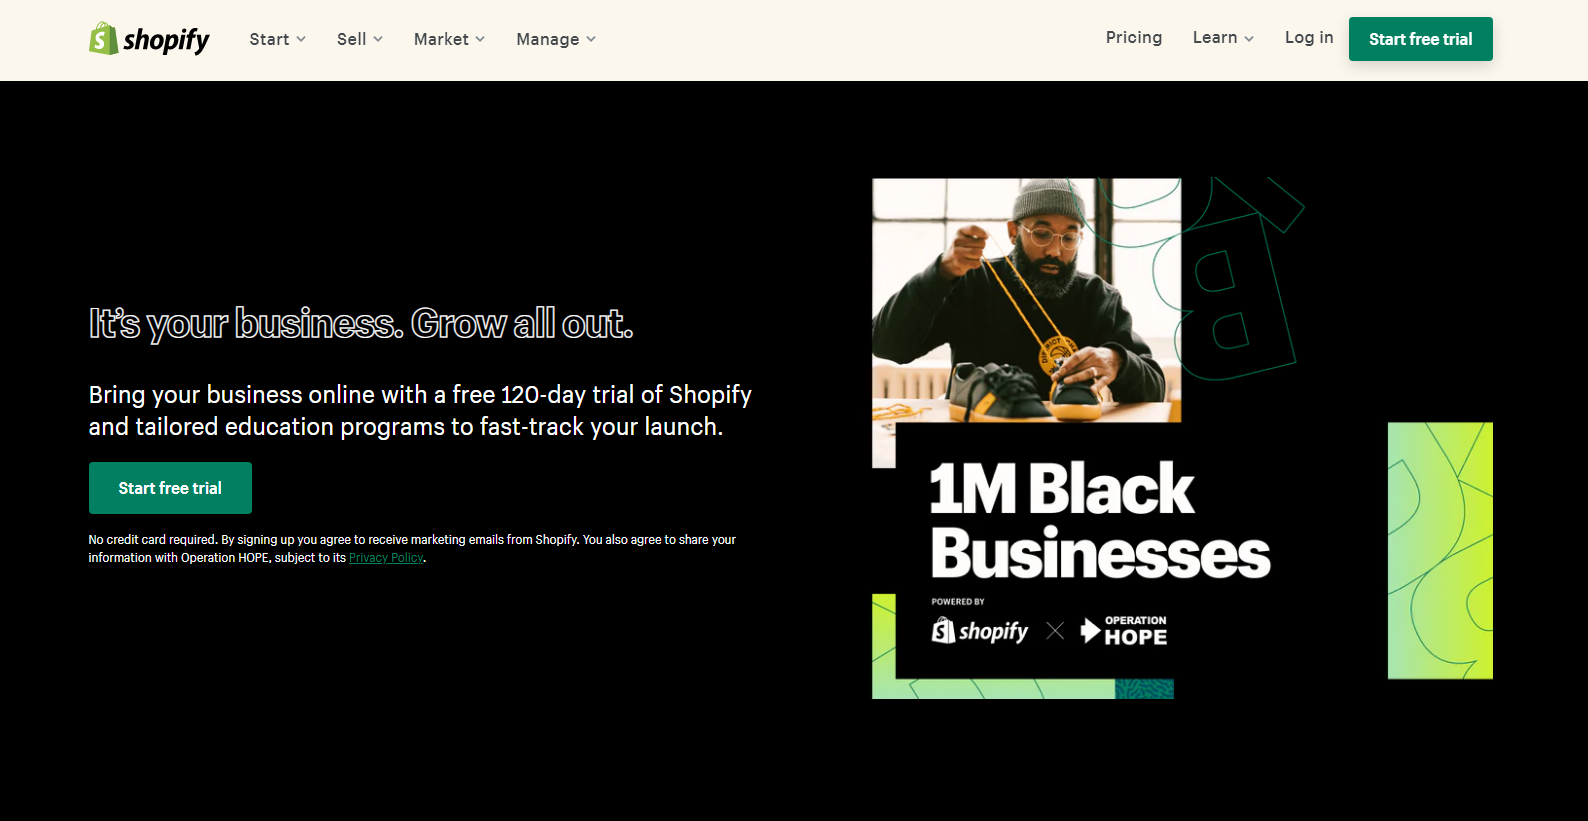 Shopify 1M Black Businesses Page